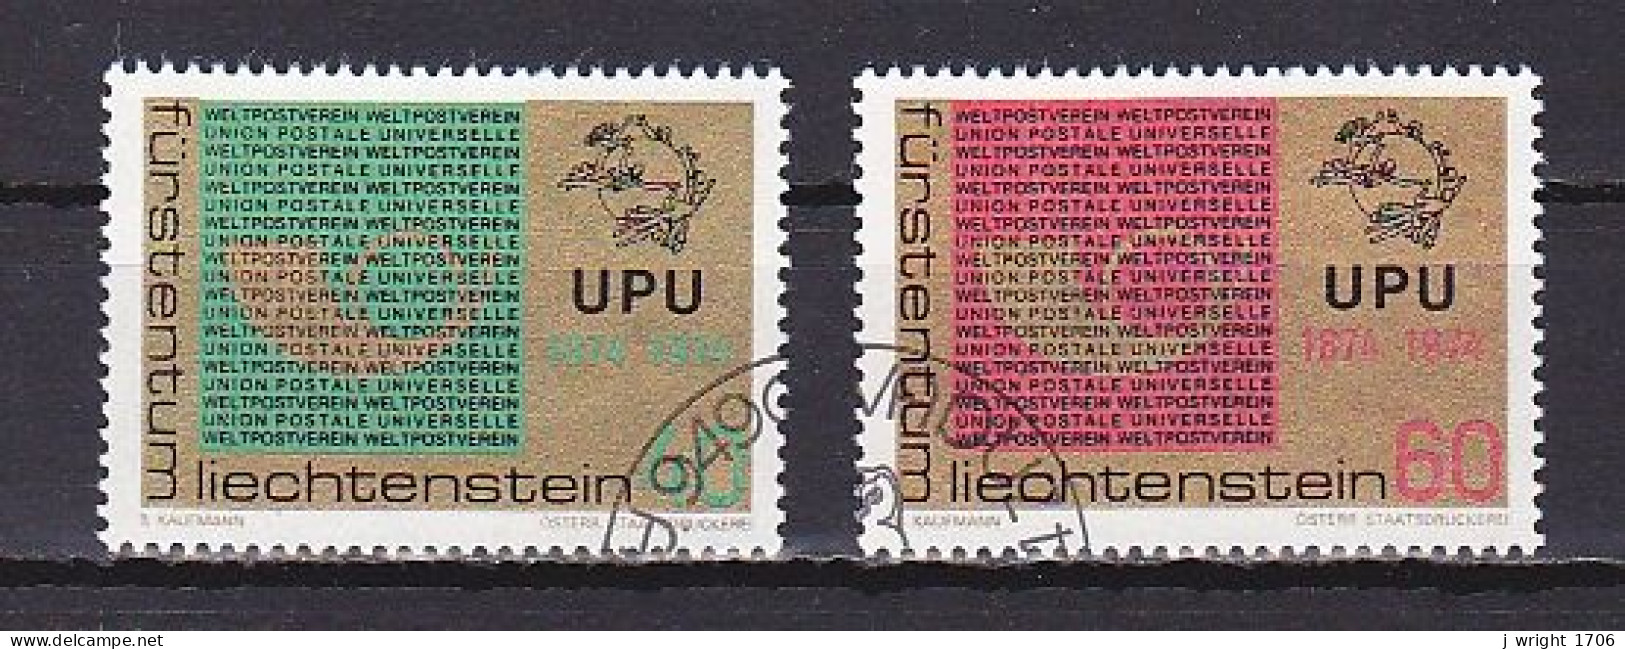 Liechtenstein, 1974, UPU Centenary, Set, CTO - Gebraucht